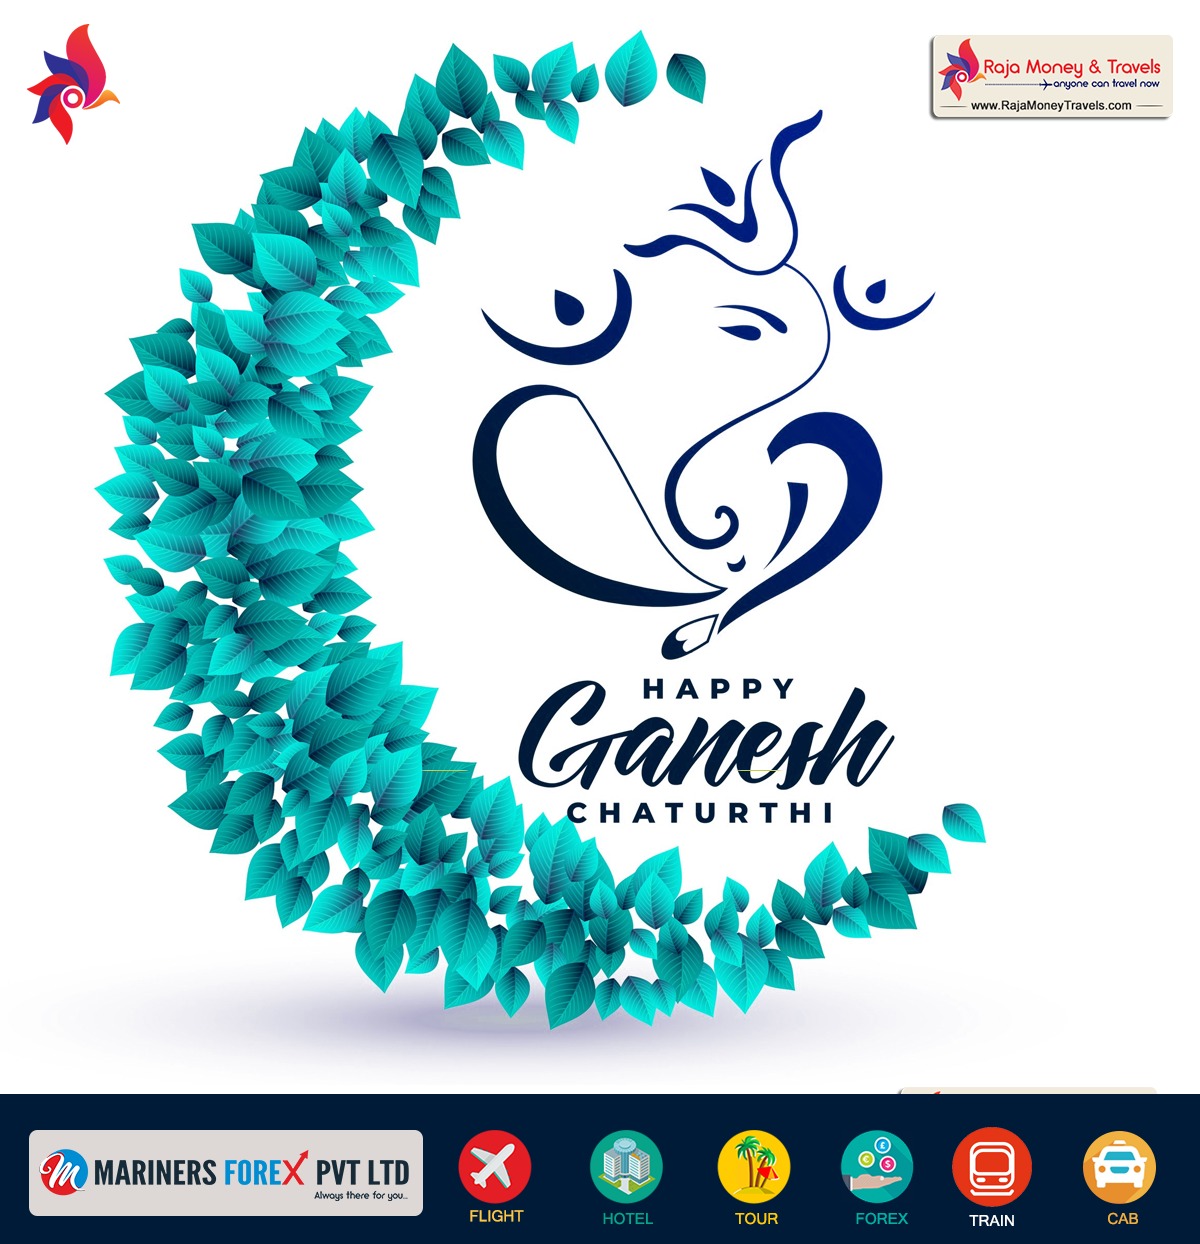 Happy Ganesh Chaturthi - RMT